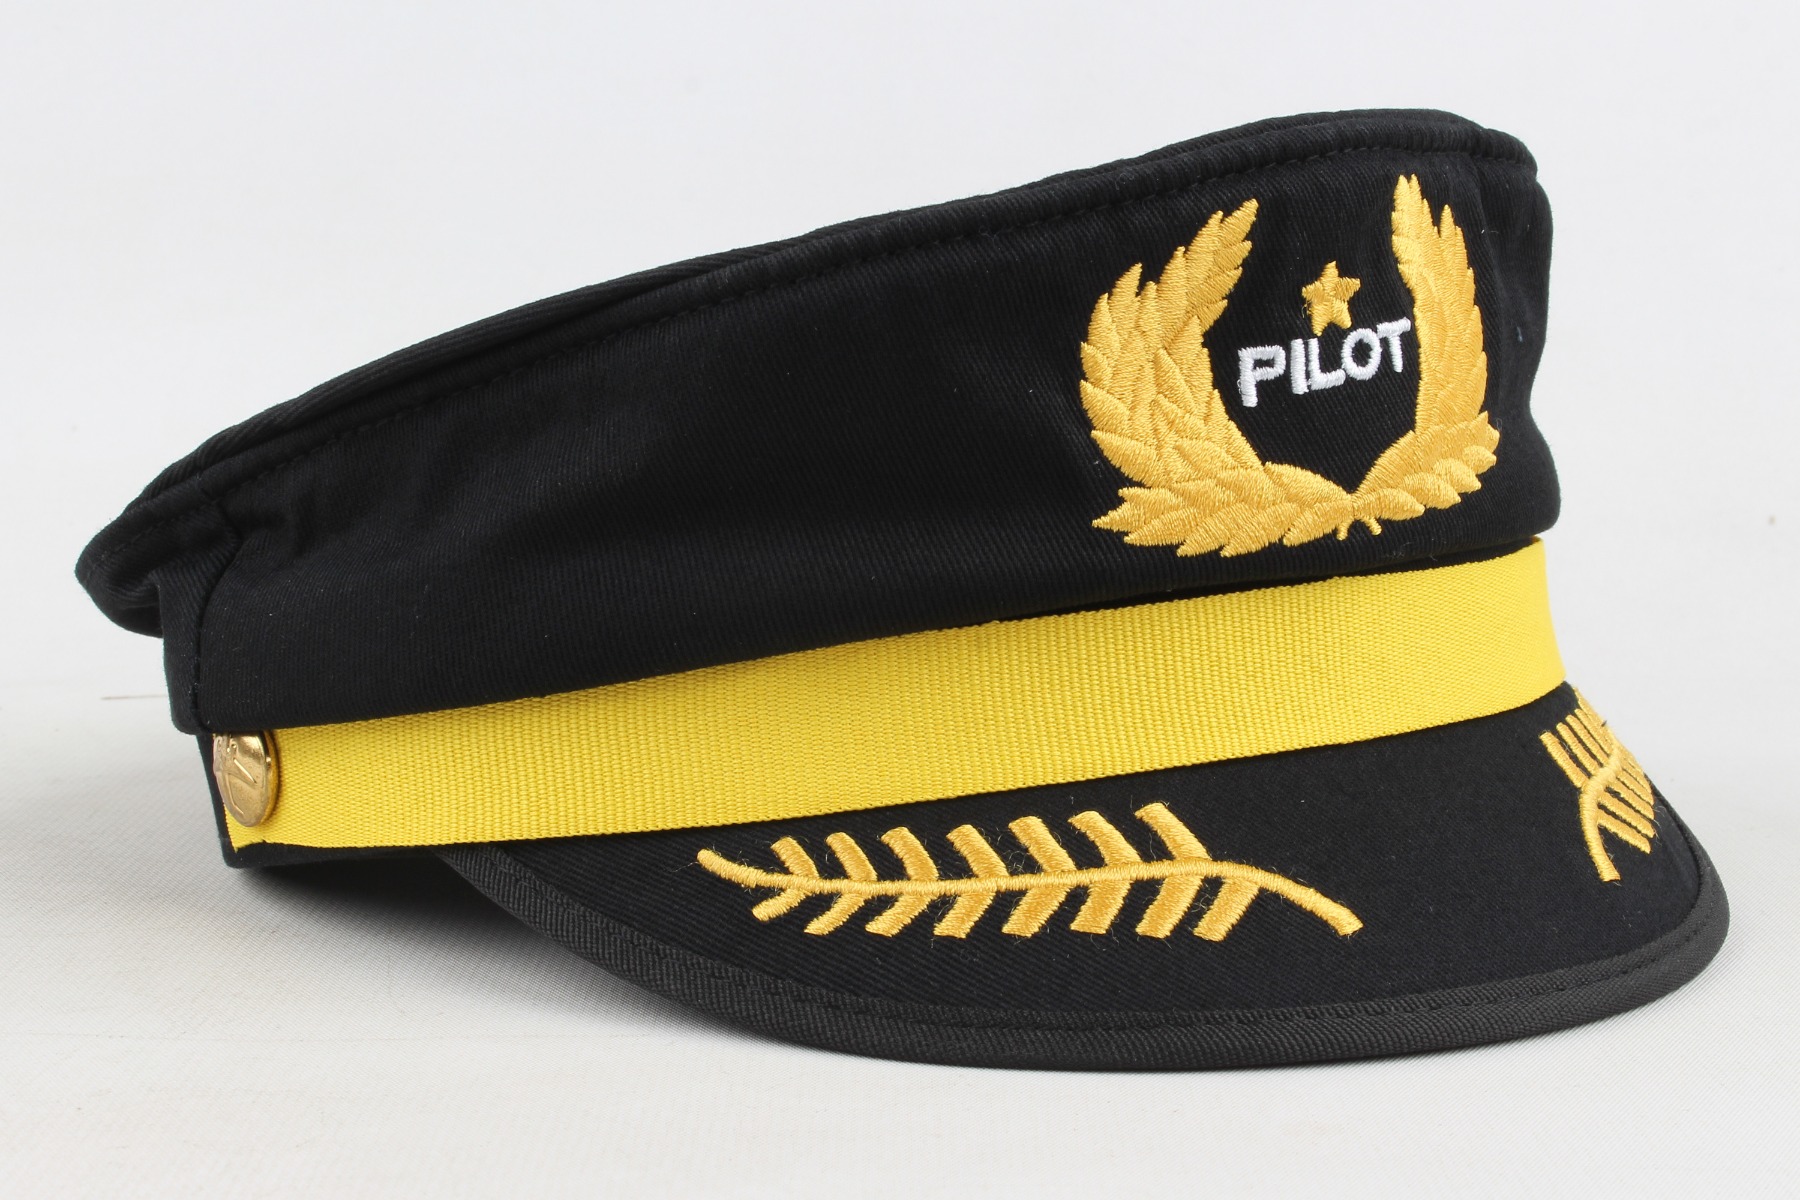 HT001 - "generic Pilot Hat"